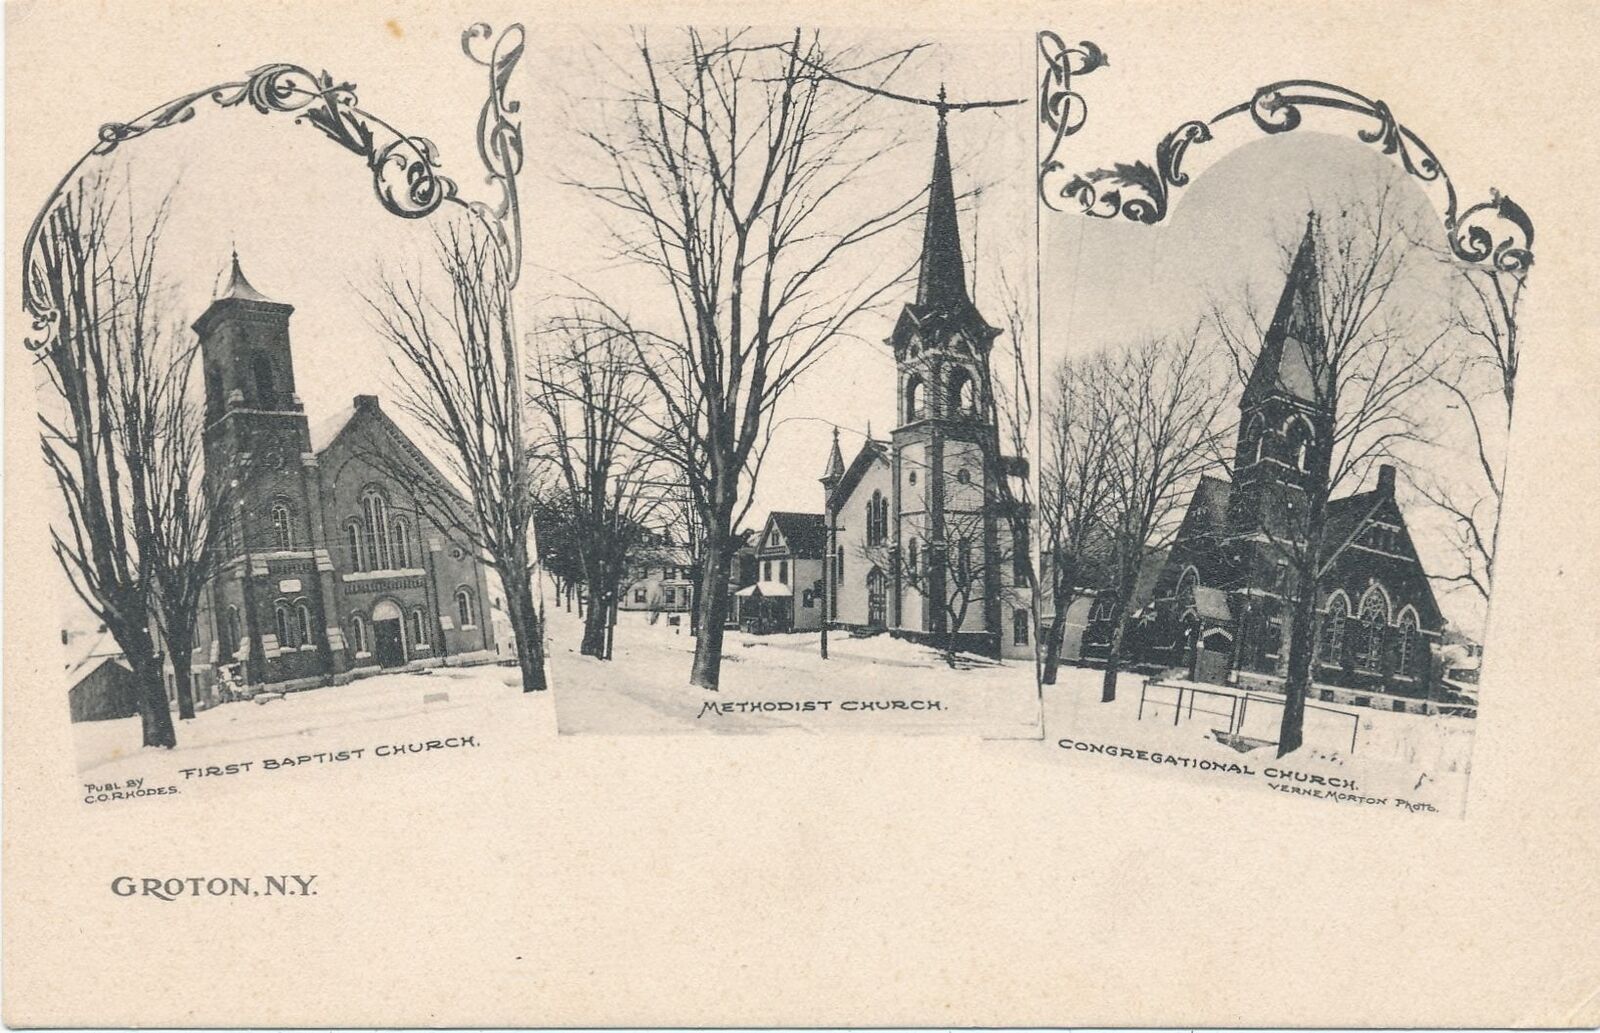 GROTON NY - First Baptist Church, Methodist Church and Congregational Church